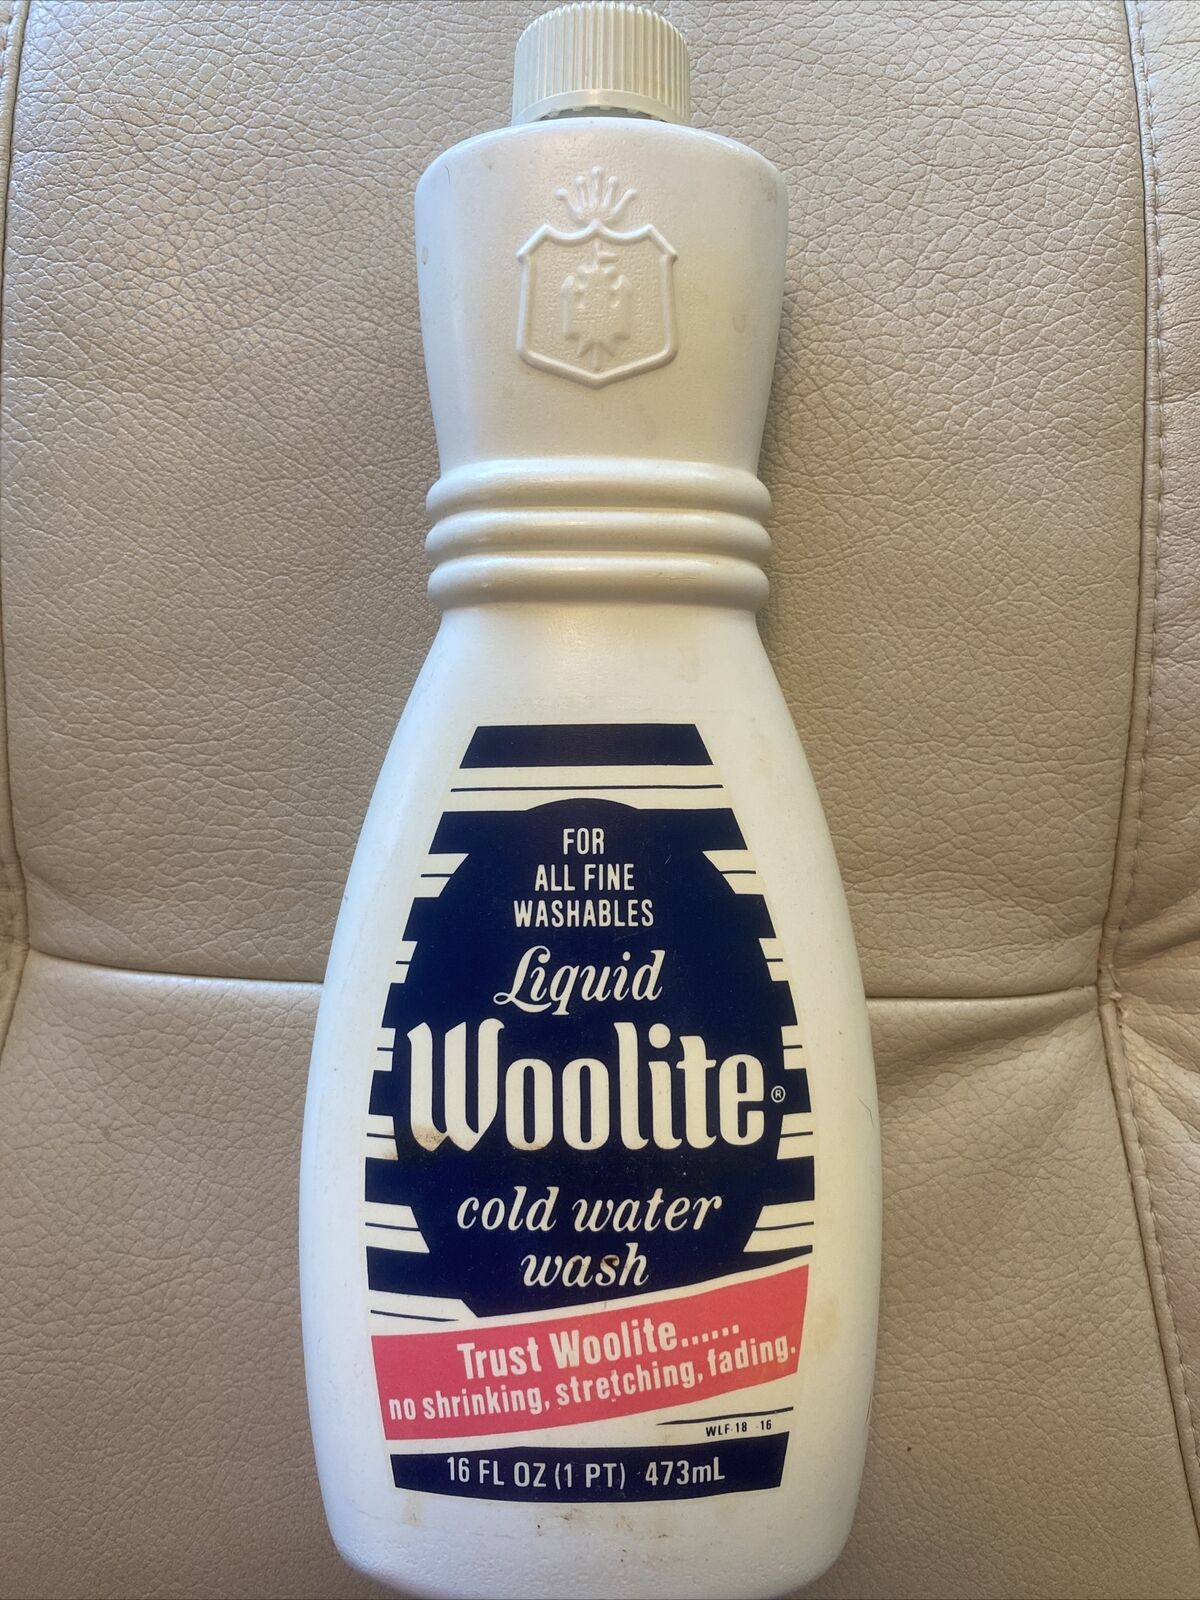 Vintage 1980s 32oz Liquid Woolite Cold Water Wash Bottle For All Fine Washables